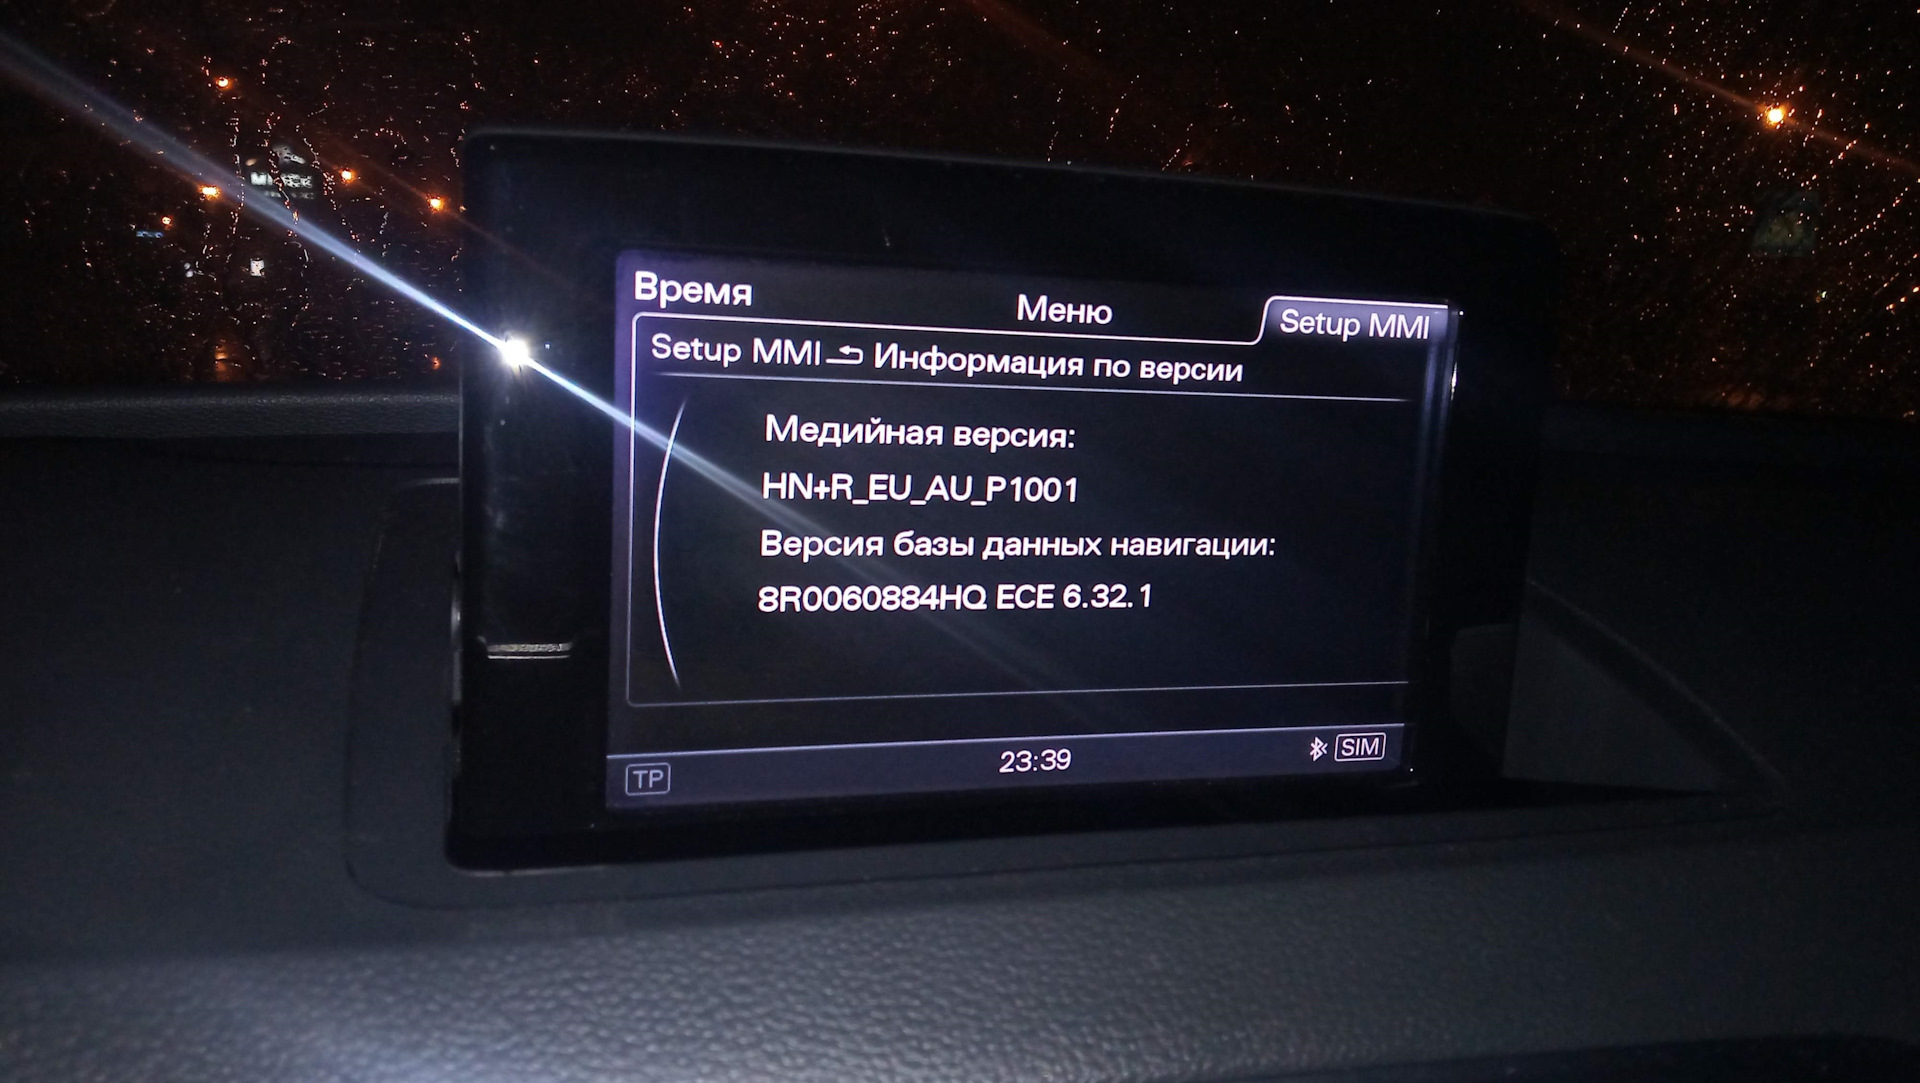 Русификация audi. Audi MMI 3g+. Русификация MMI 3g. Панель управления MMI 3g. Зеленое меню MMI 3g Plus.